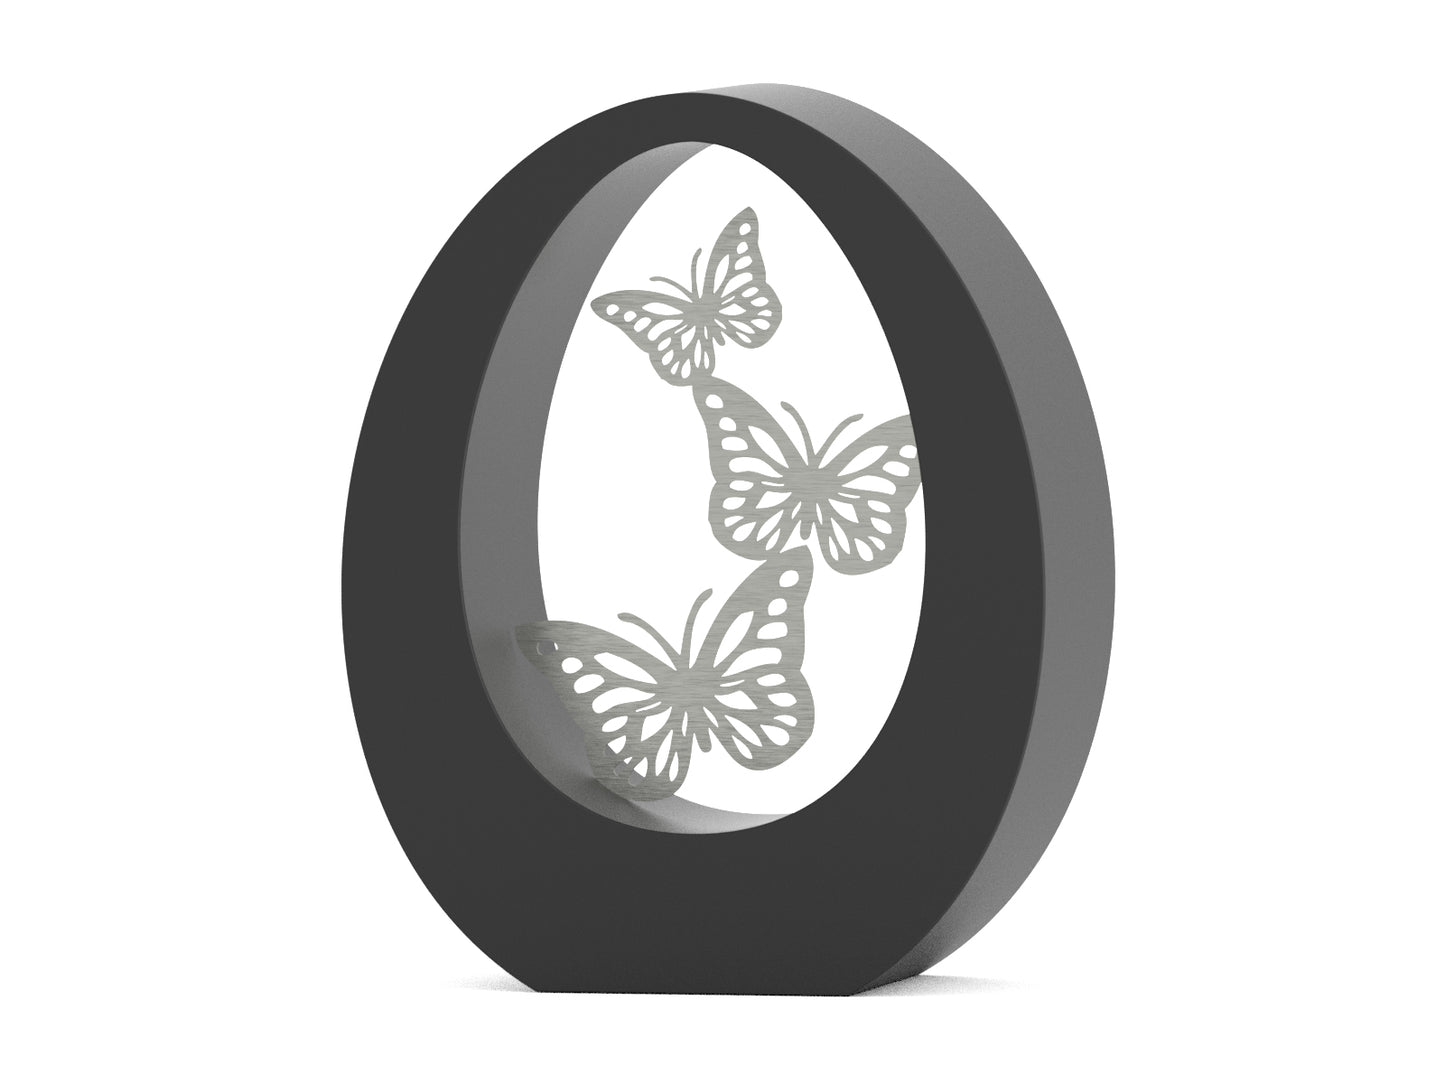 ovale urn van zwart rvs met vlinders